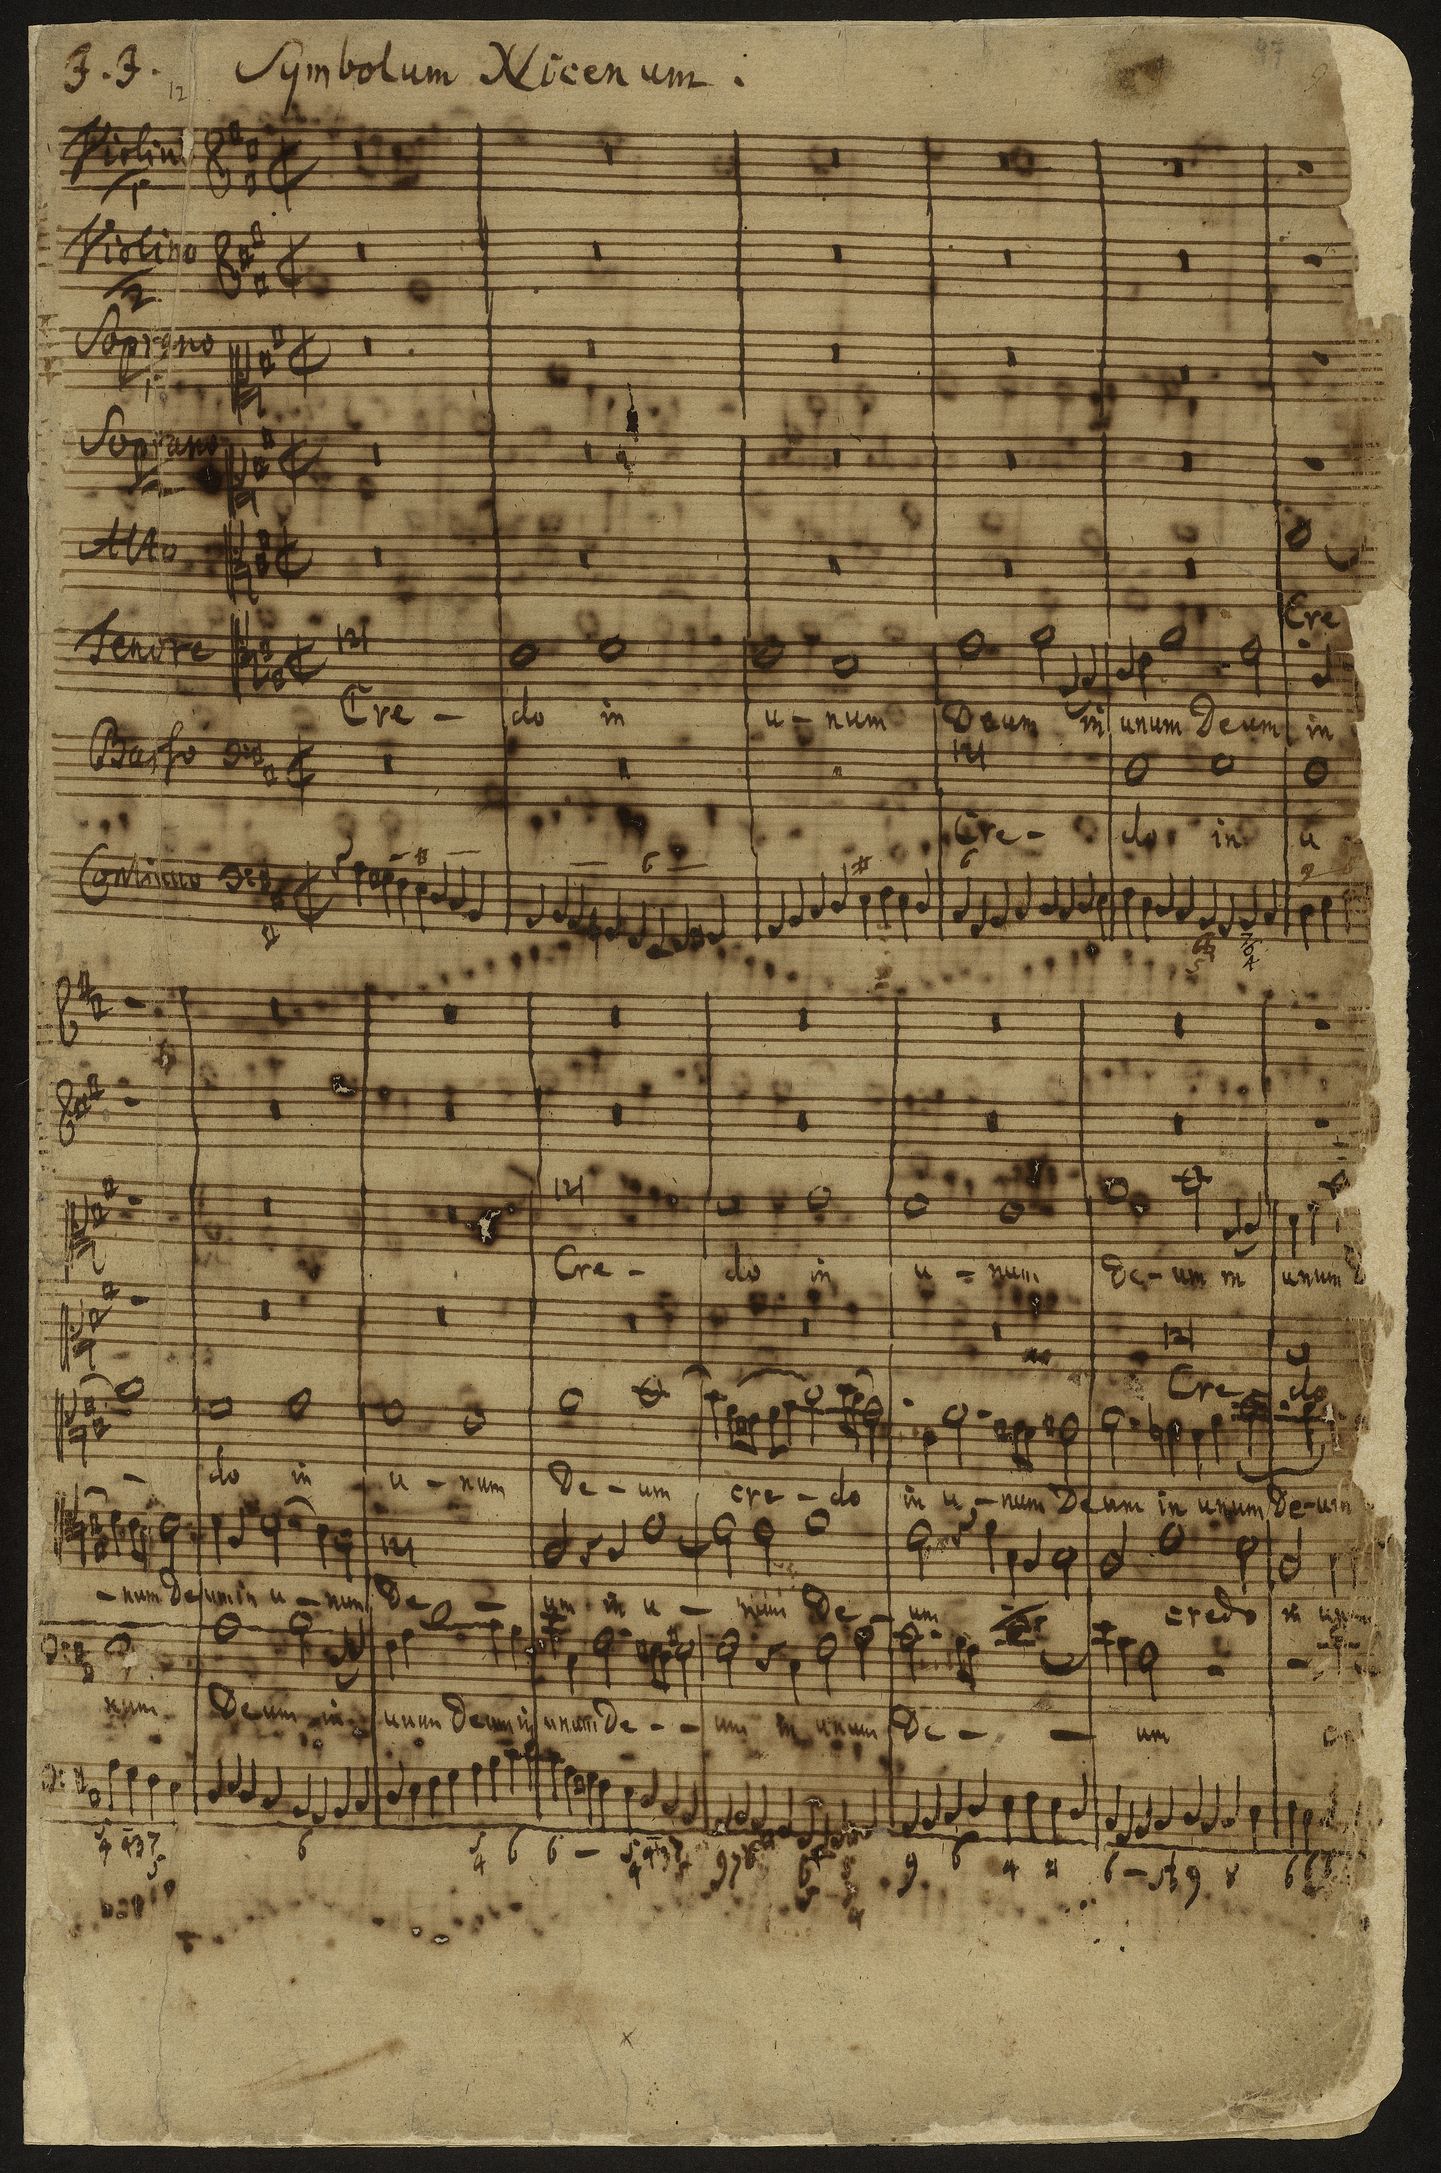 Symbolum Nicenum (Credo) - first page of Bach's autograph score